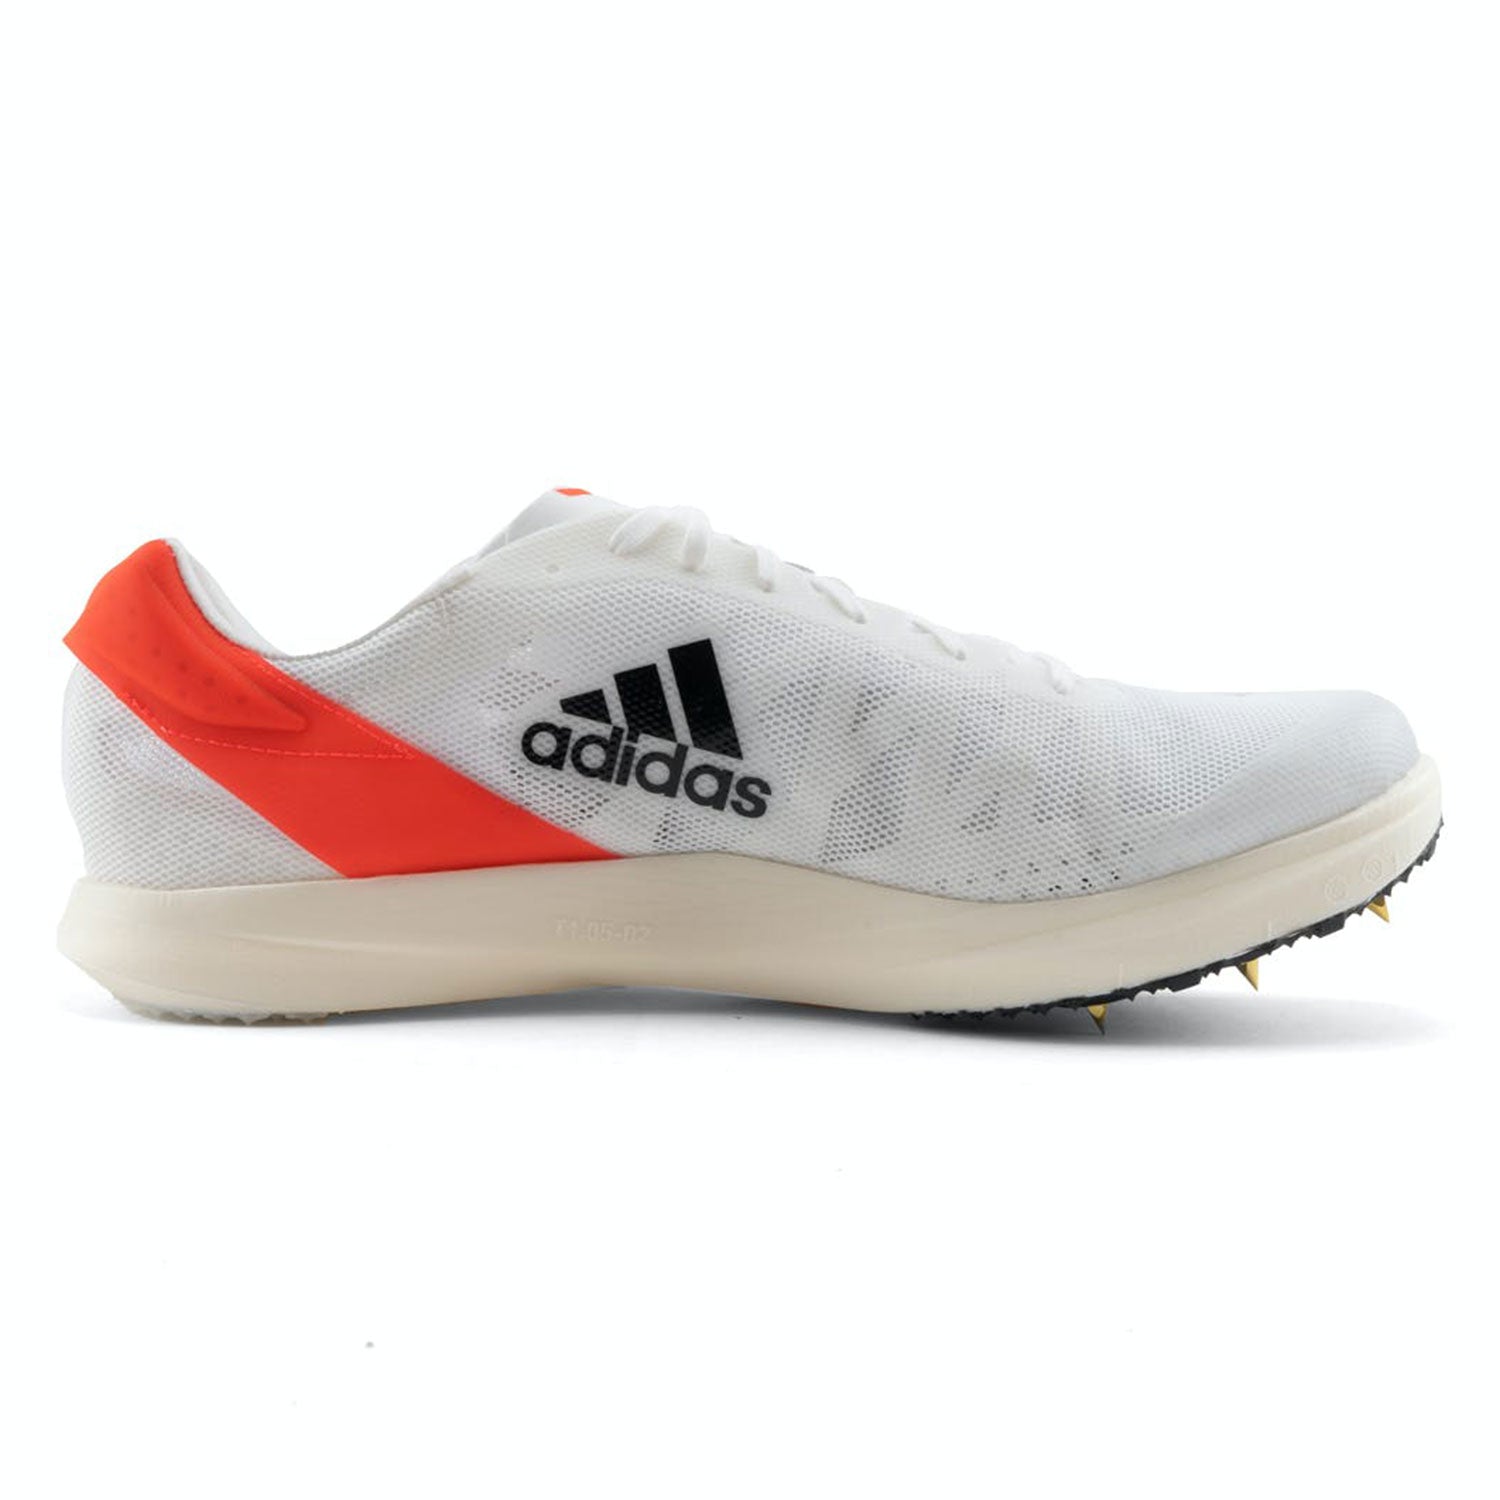 Adidas Adizero Avanti TYO Track and Field Shoe - White/Orange